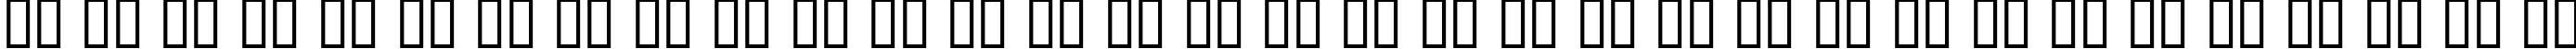 Пример написания русского алфавита шрифтом Prakrta